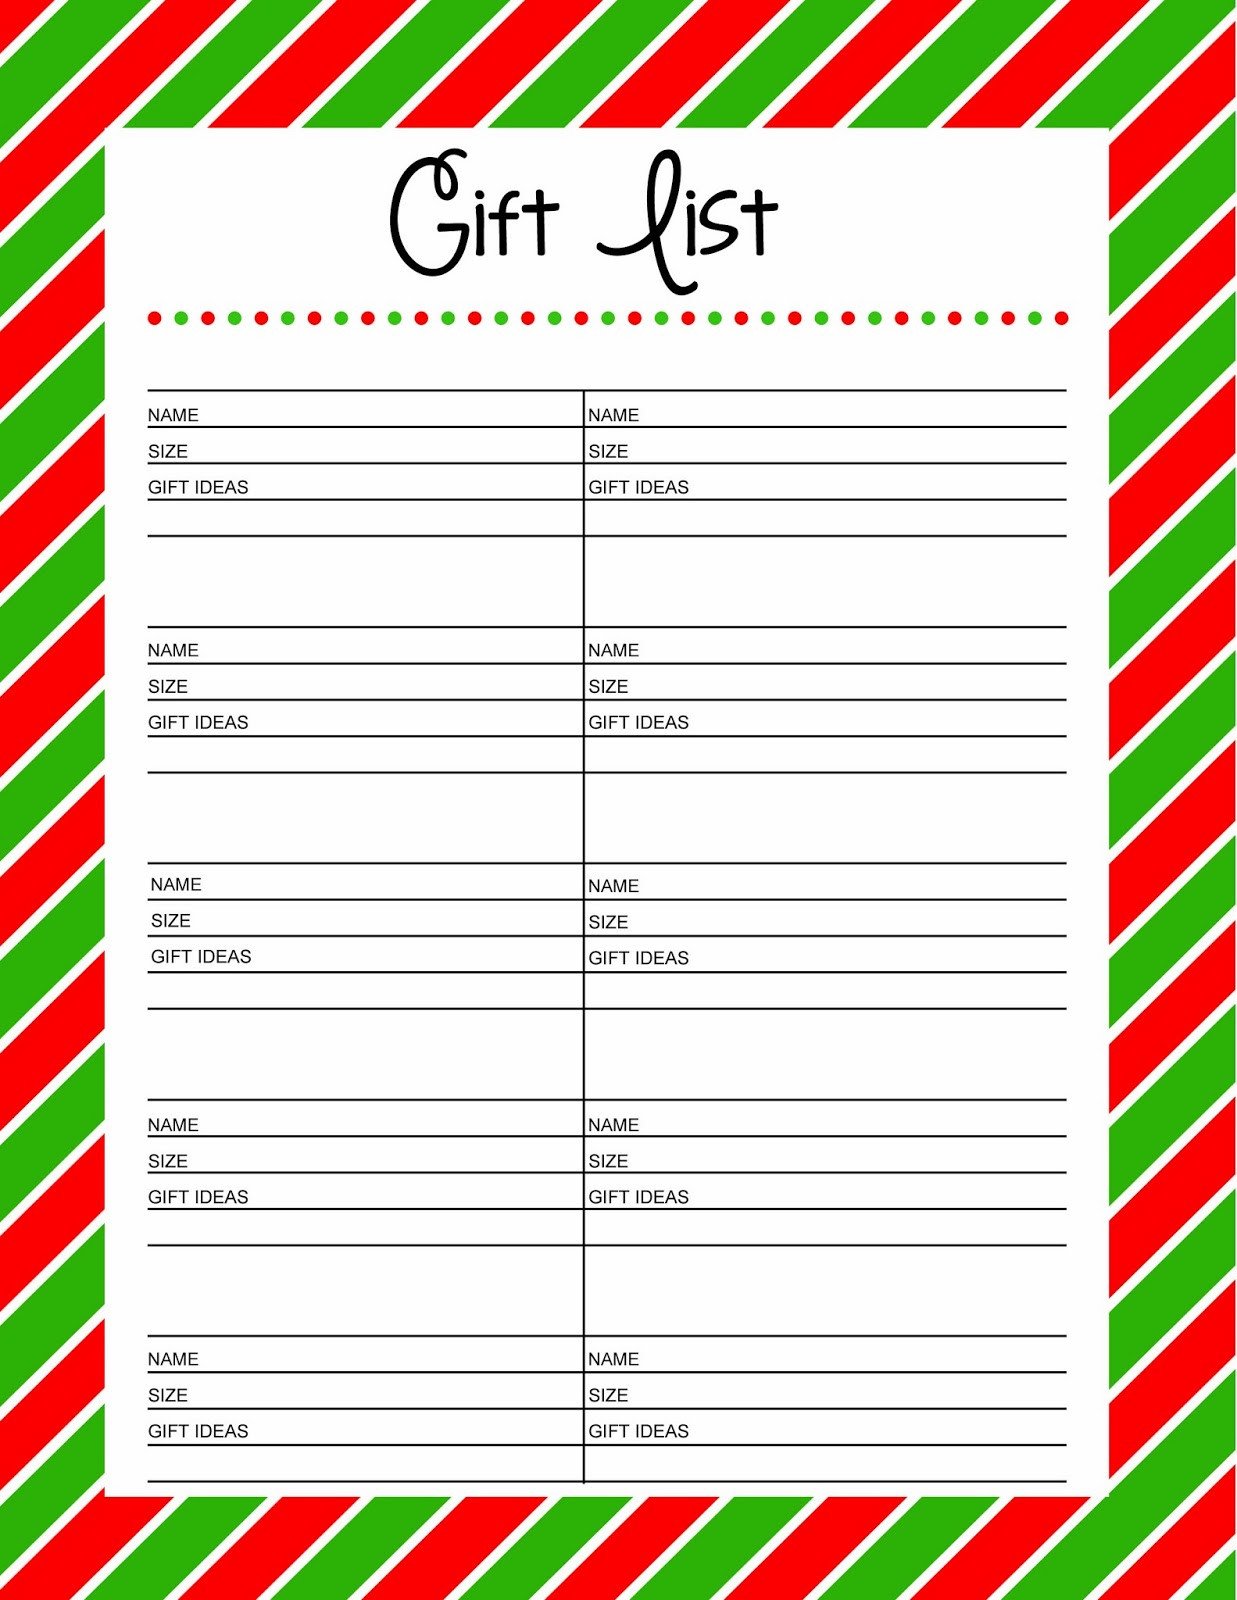 Christmas Gift List Template Free Printable Gift List 25 Days to An organized